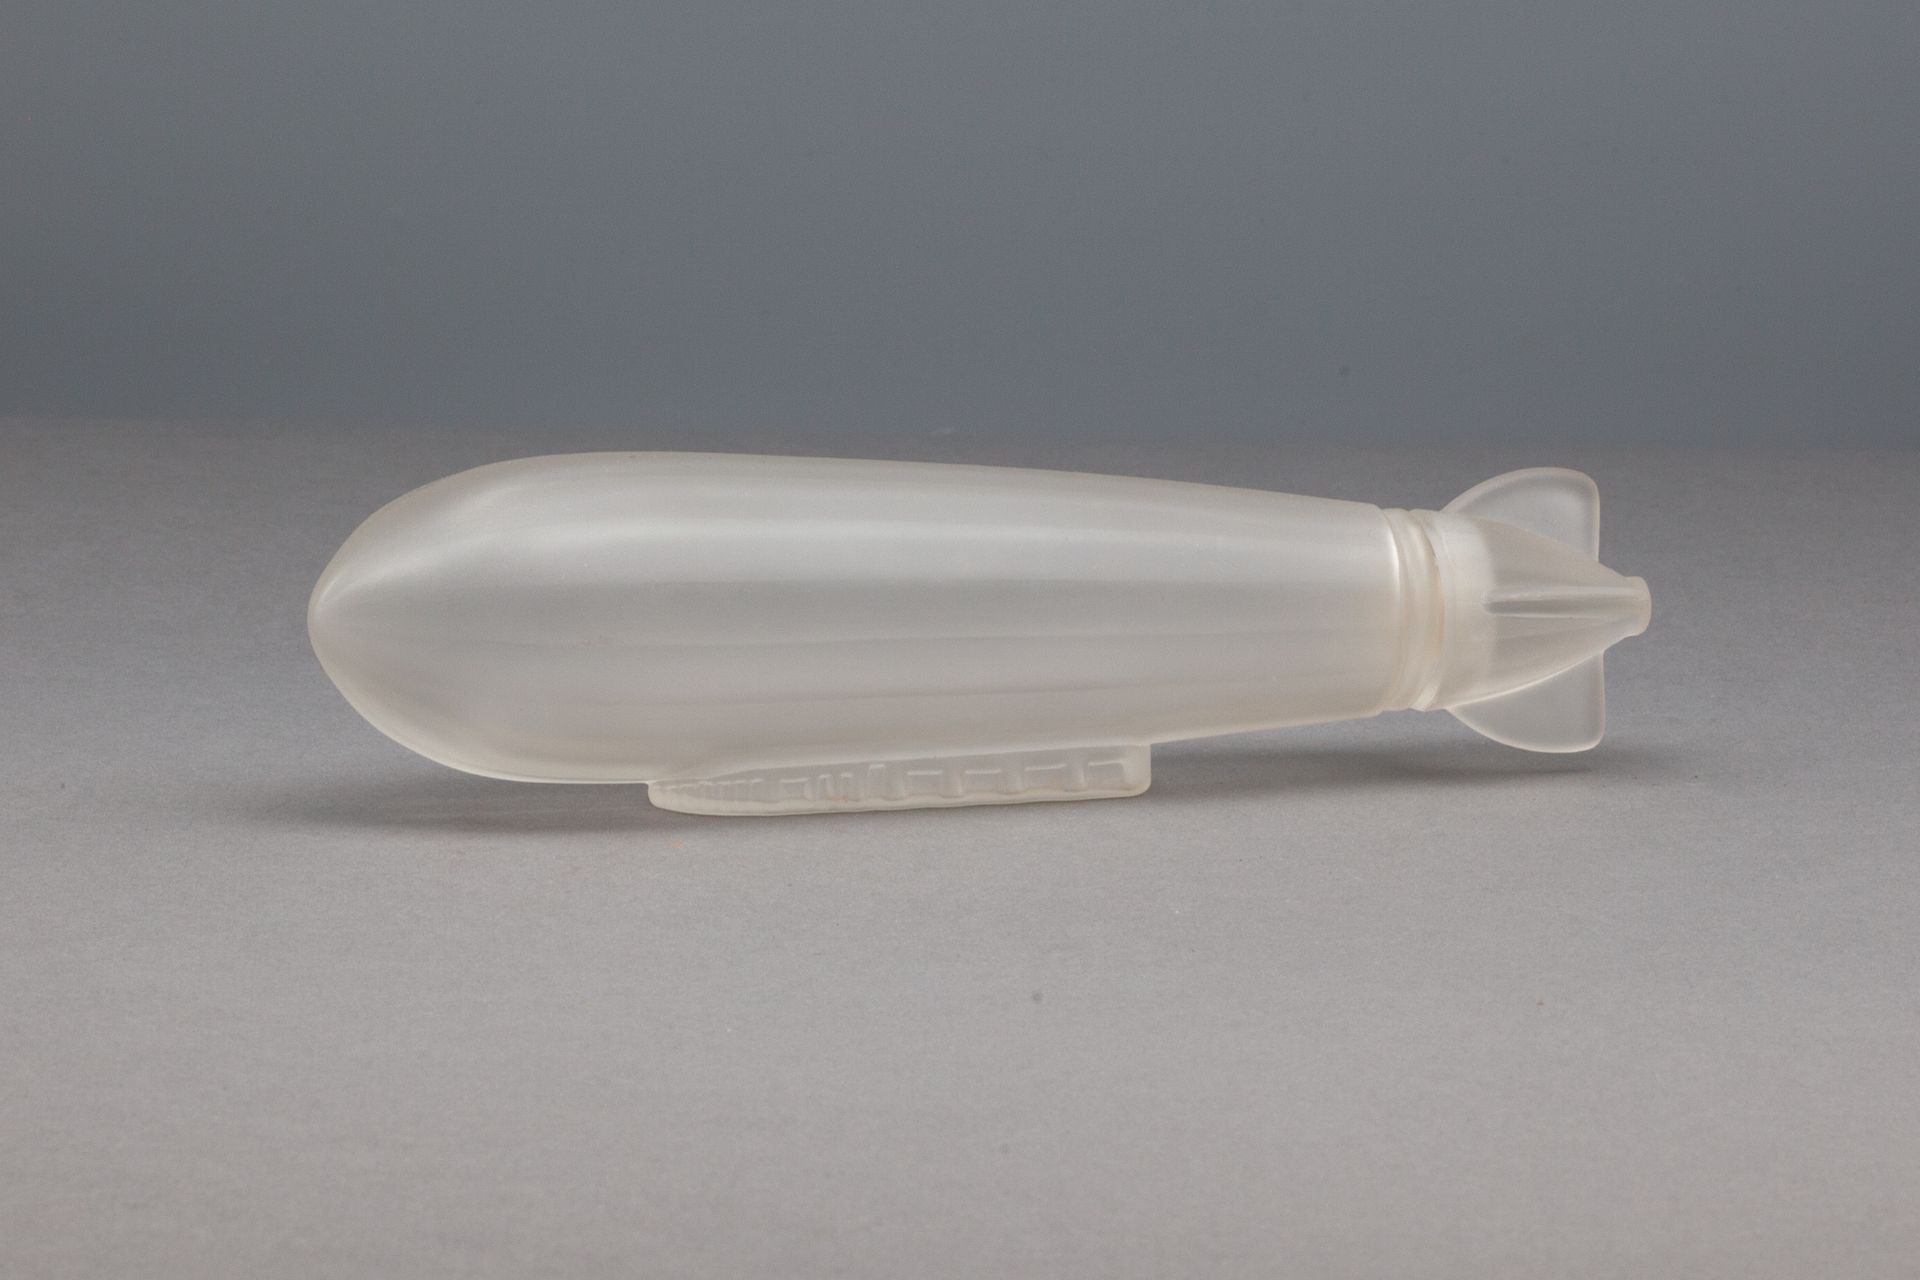 ANONYME - FLACON "ZEPPELIN" 代表齐柏林飞艇的乳白色玻璃瓶。长17厘米